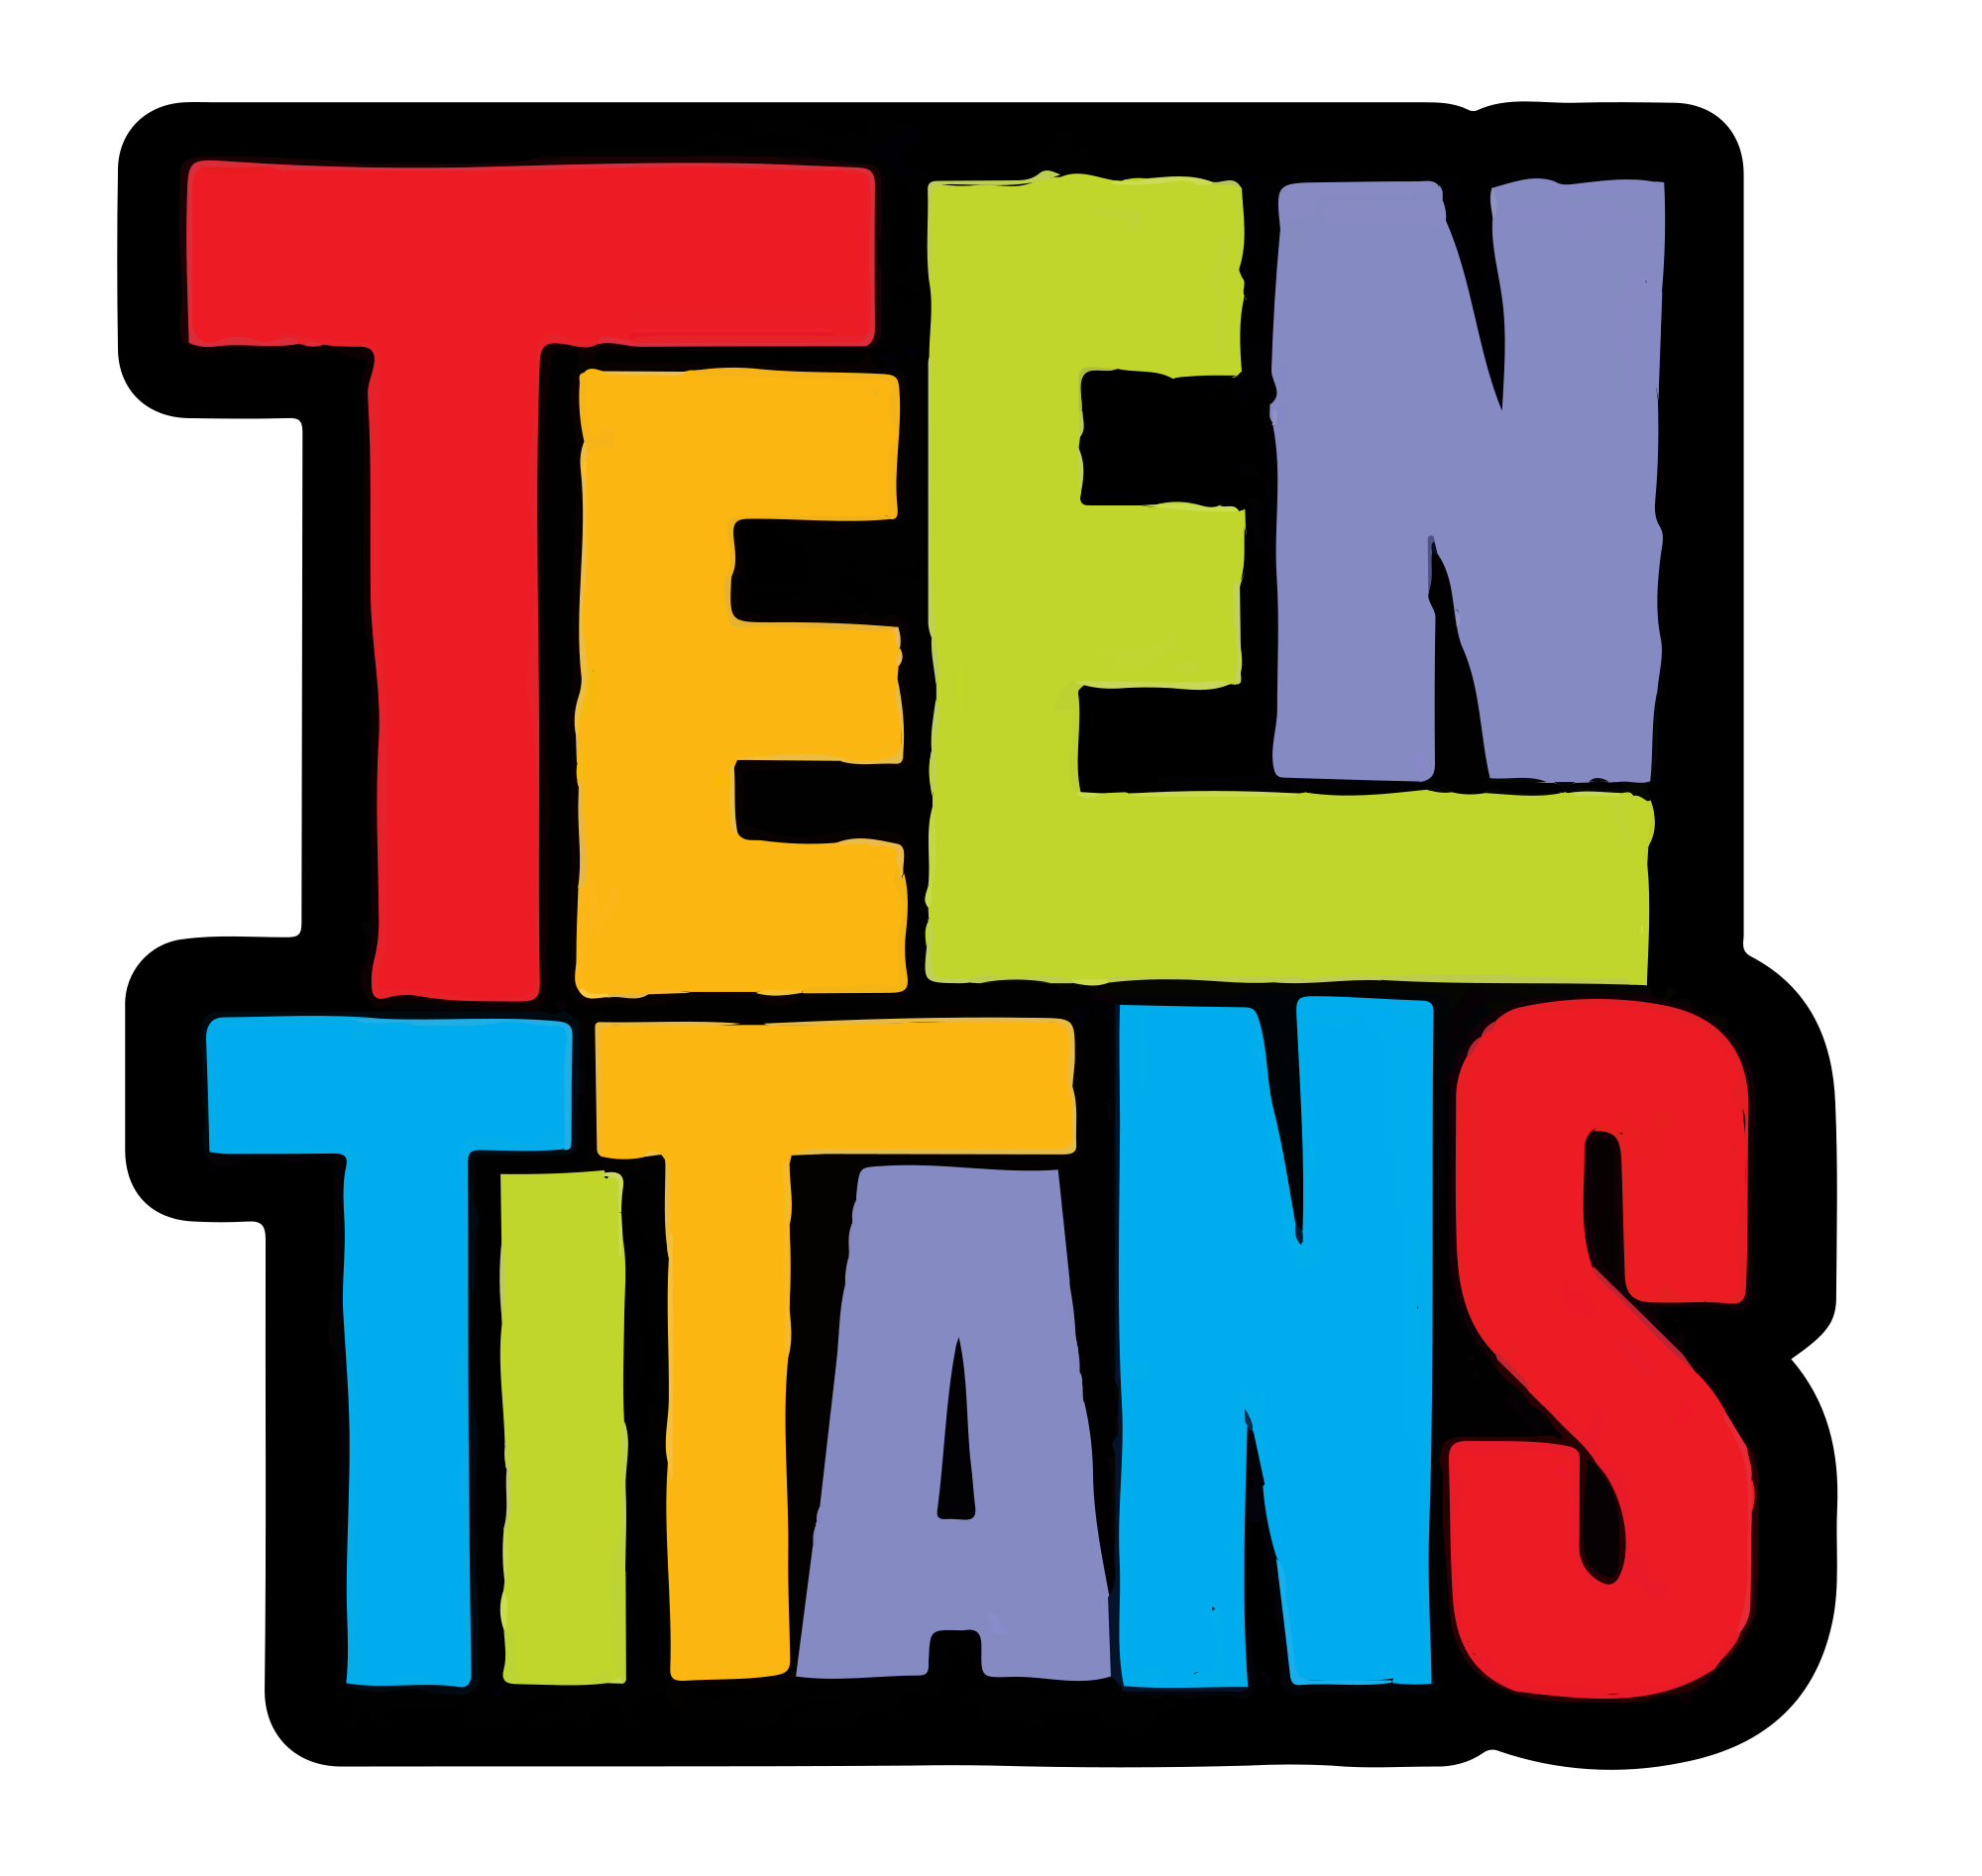 Teen_Titans_-_logo_%28English%29.png